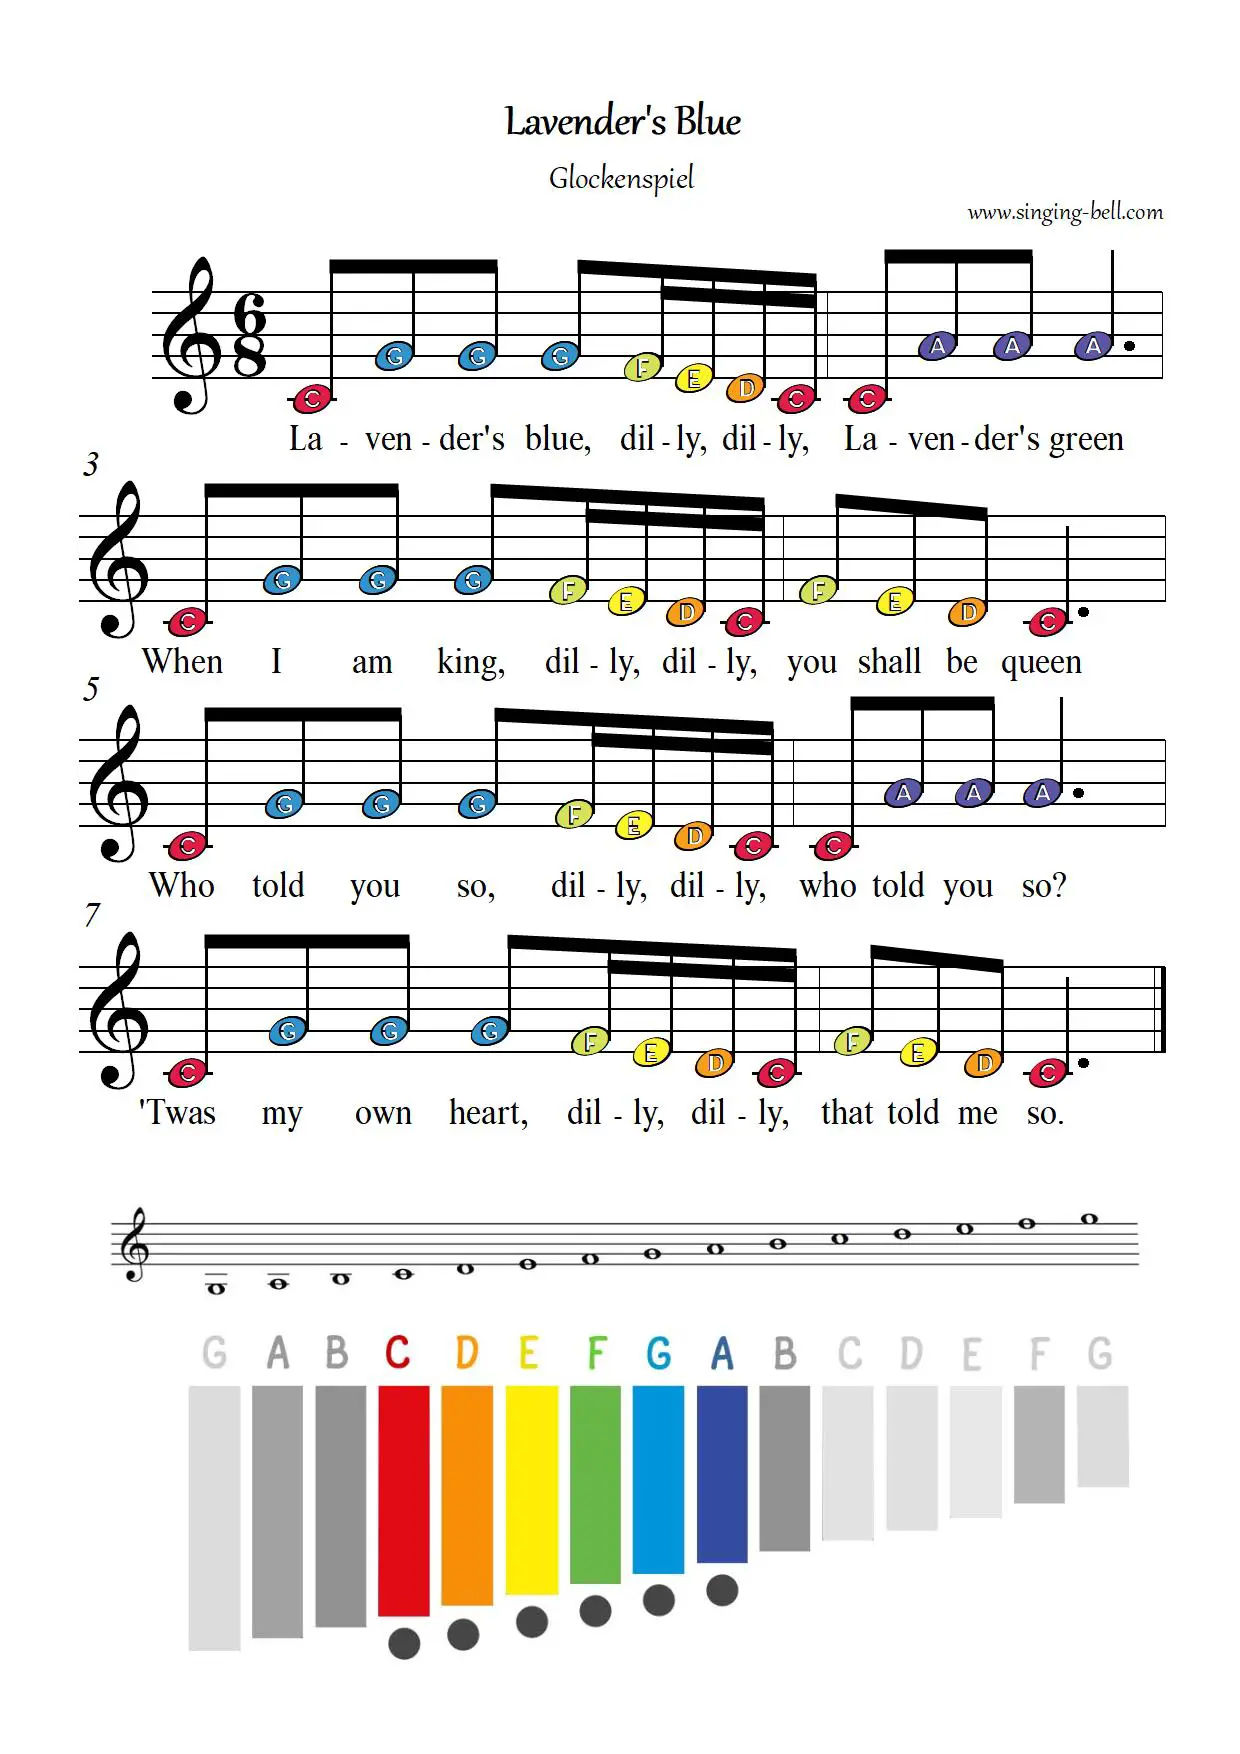 Lavender's Blue free xylophone glockenspiel sheet music color notes chart pdf